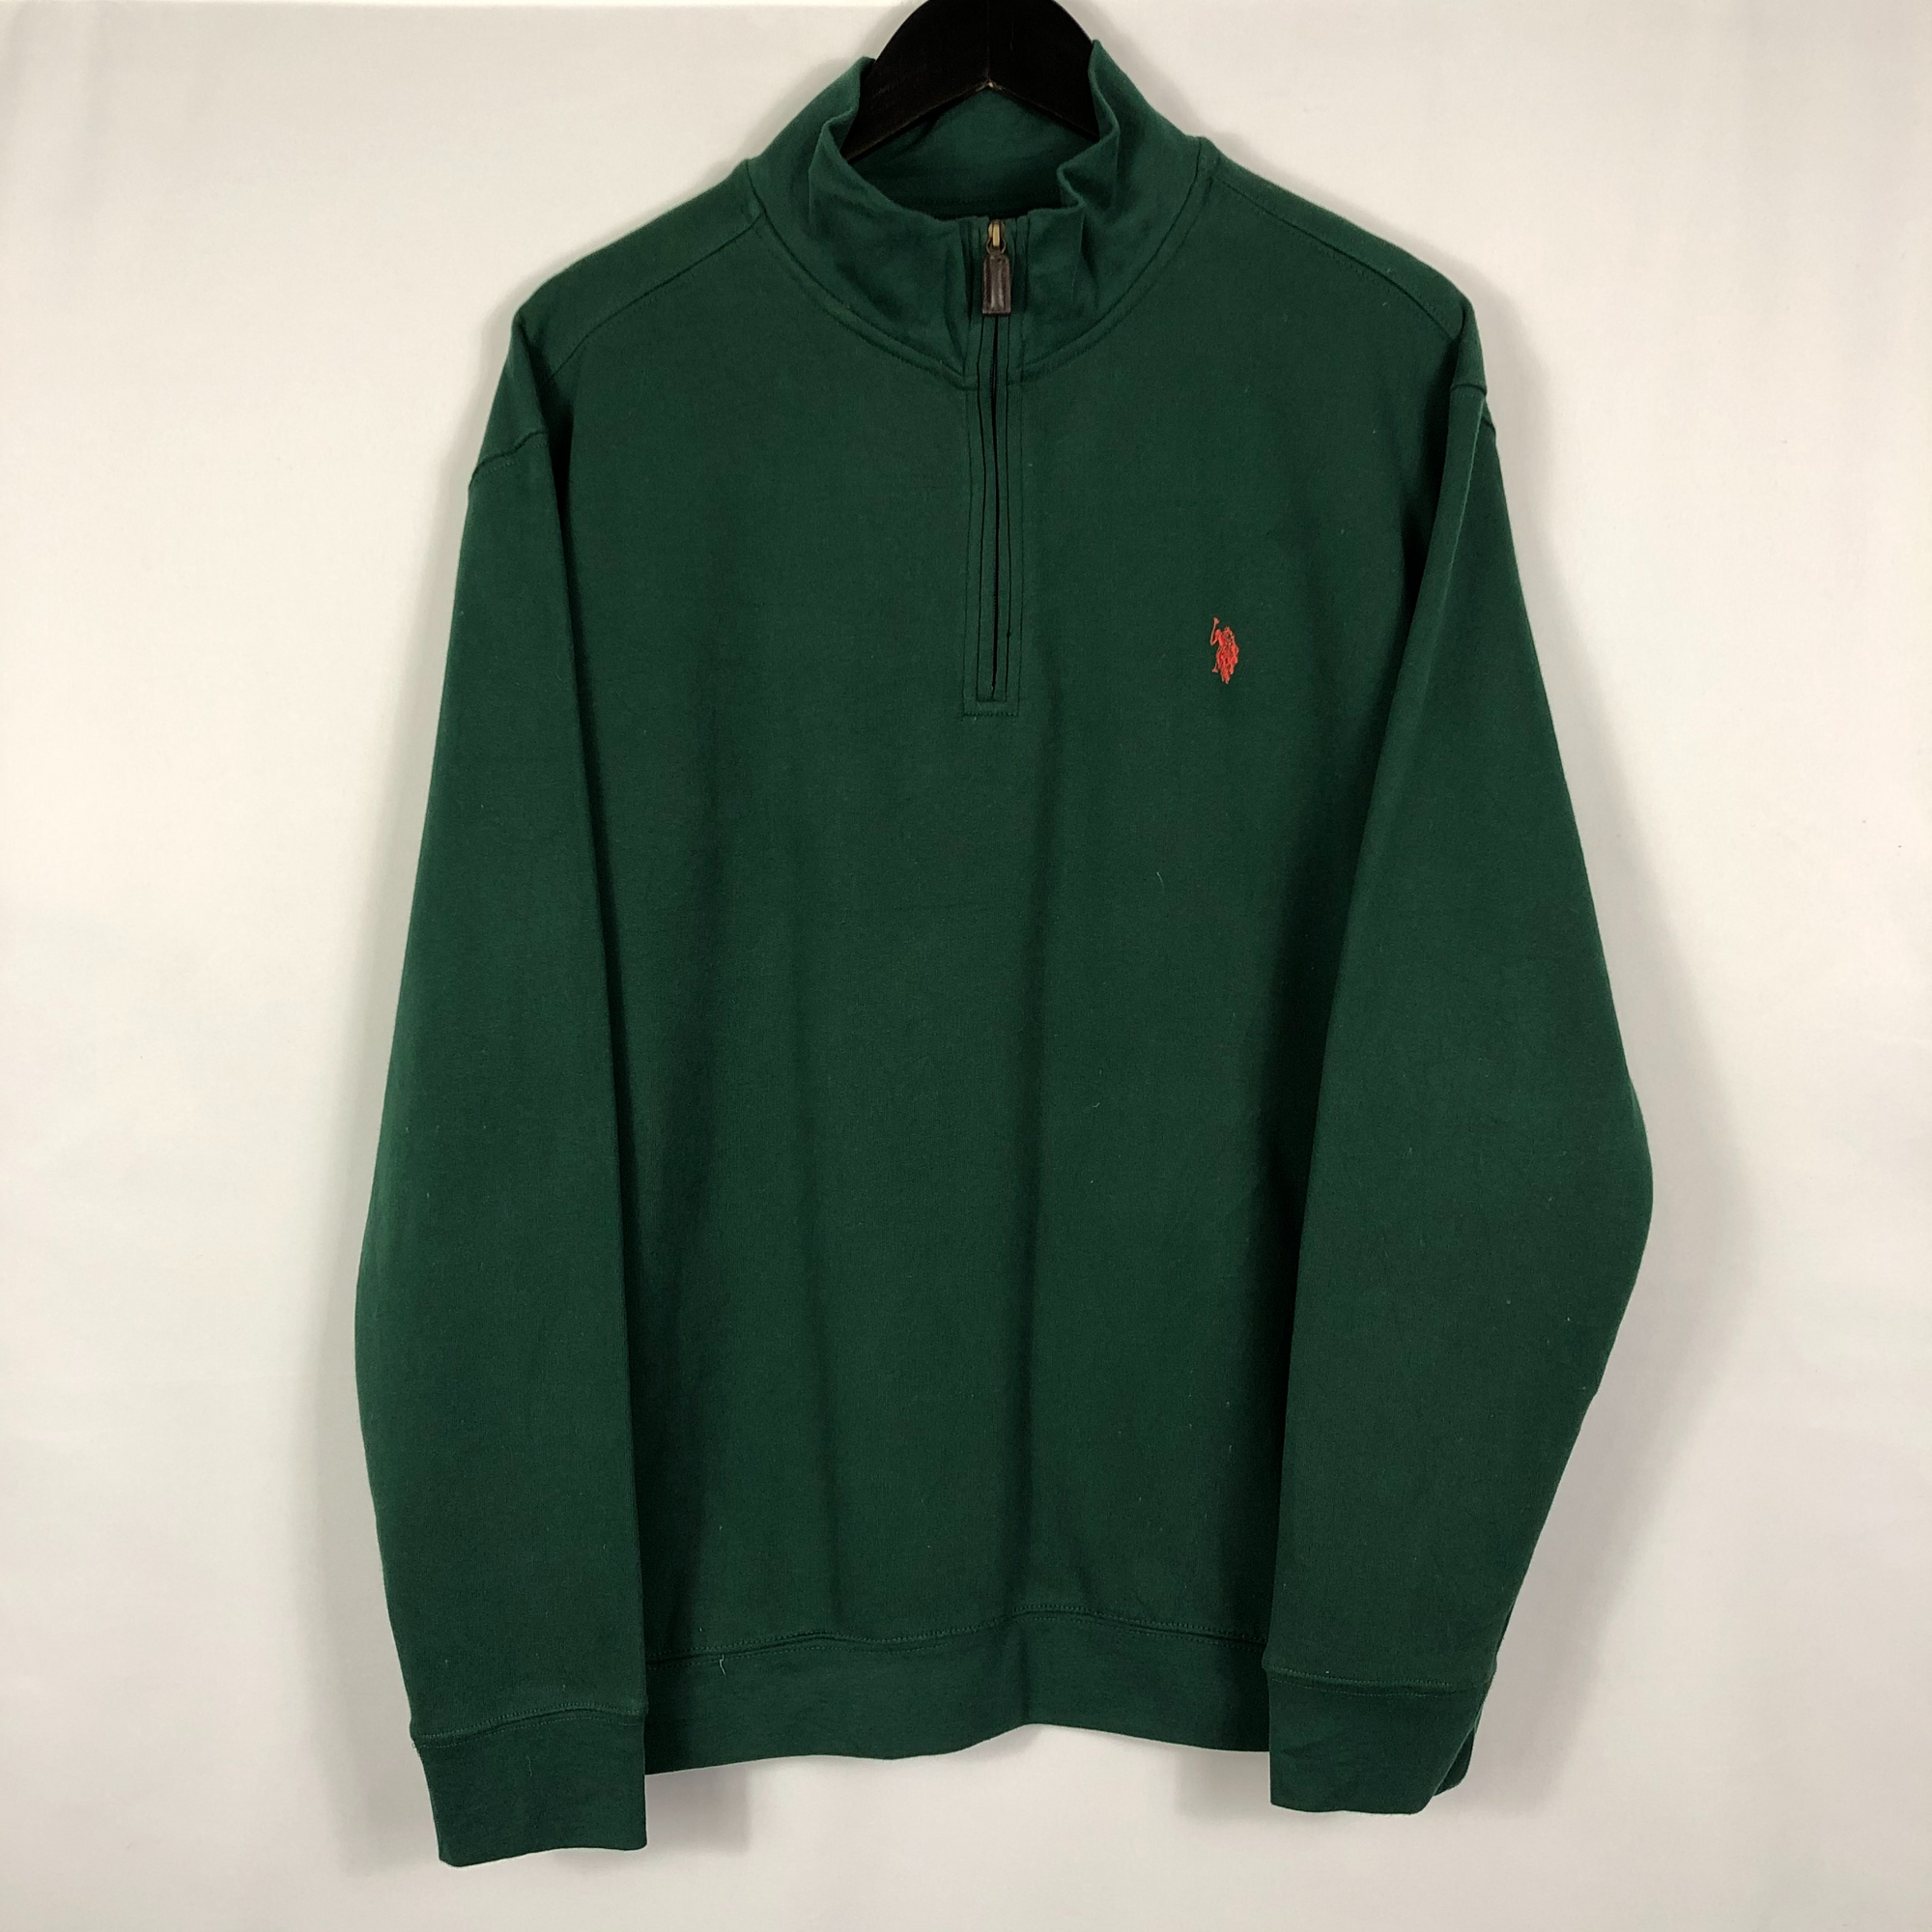 Vintage US Polo Association 1/4 Zip Sweatshirt in Green - Men's Large/Women's XL